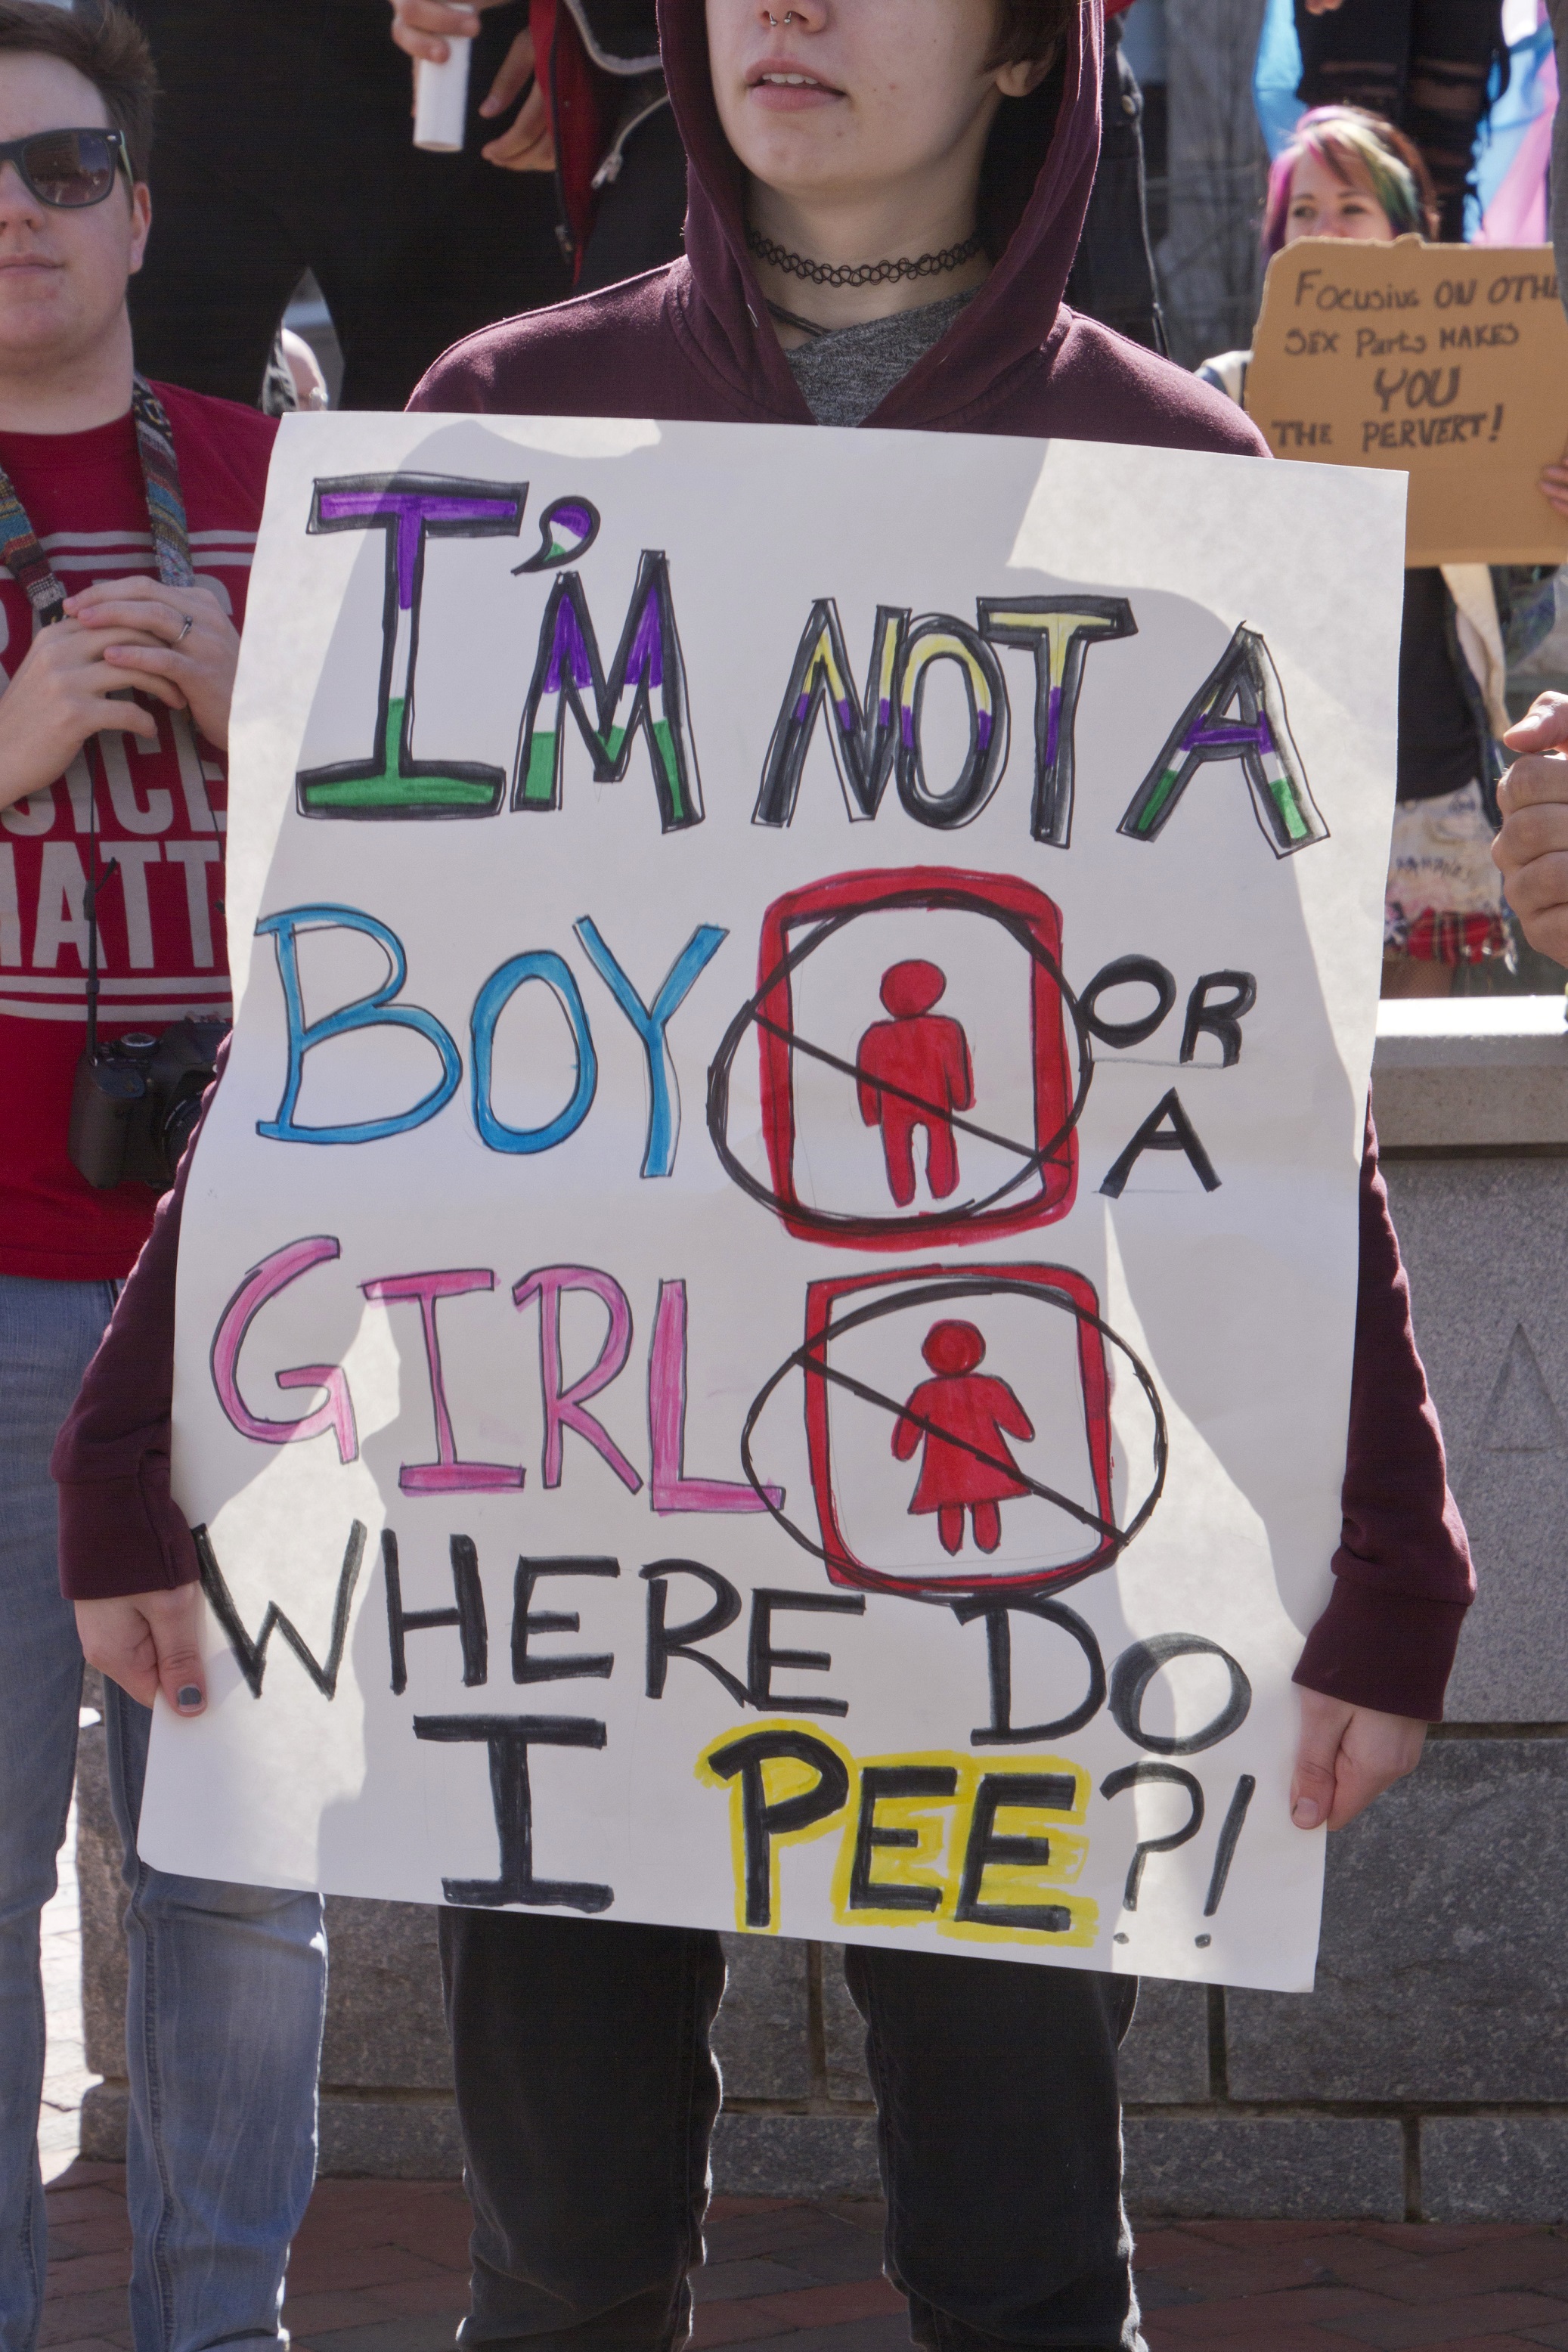 Shemale Slips Dick In Dress - Transgender Bathroom Bill: What Should Be Done?